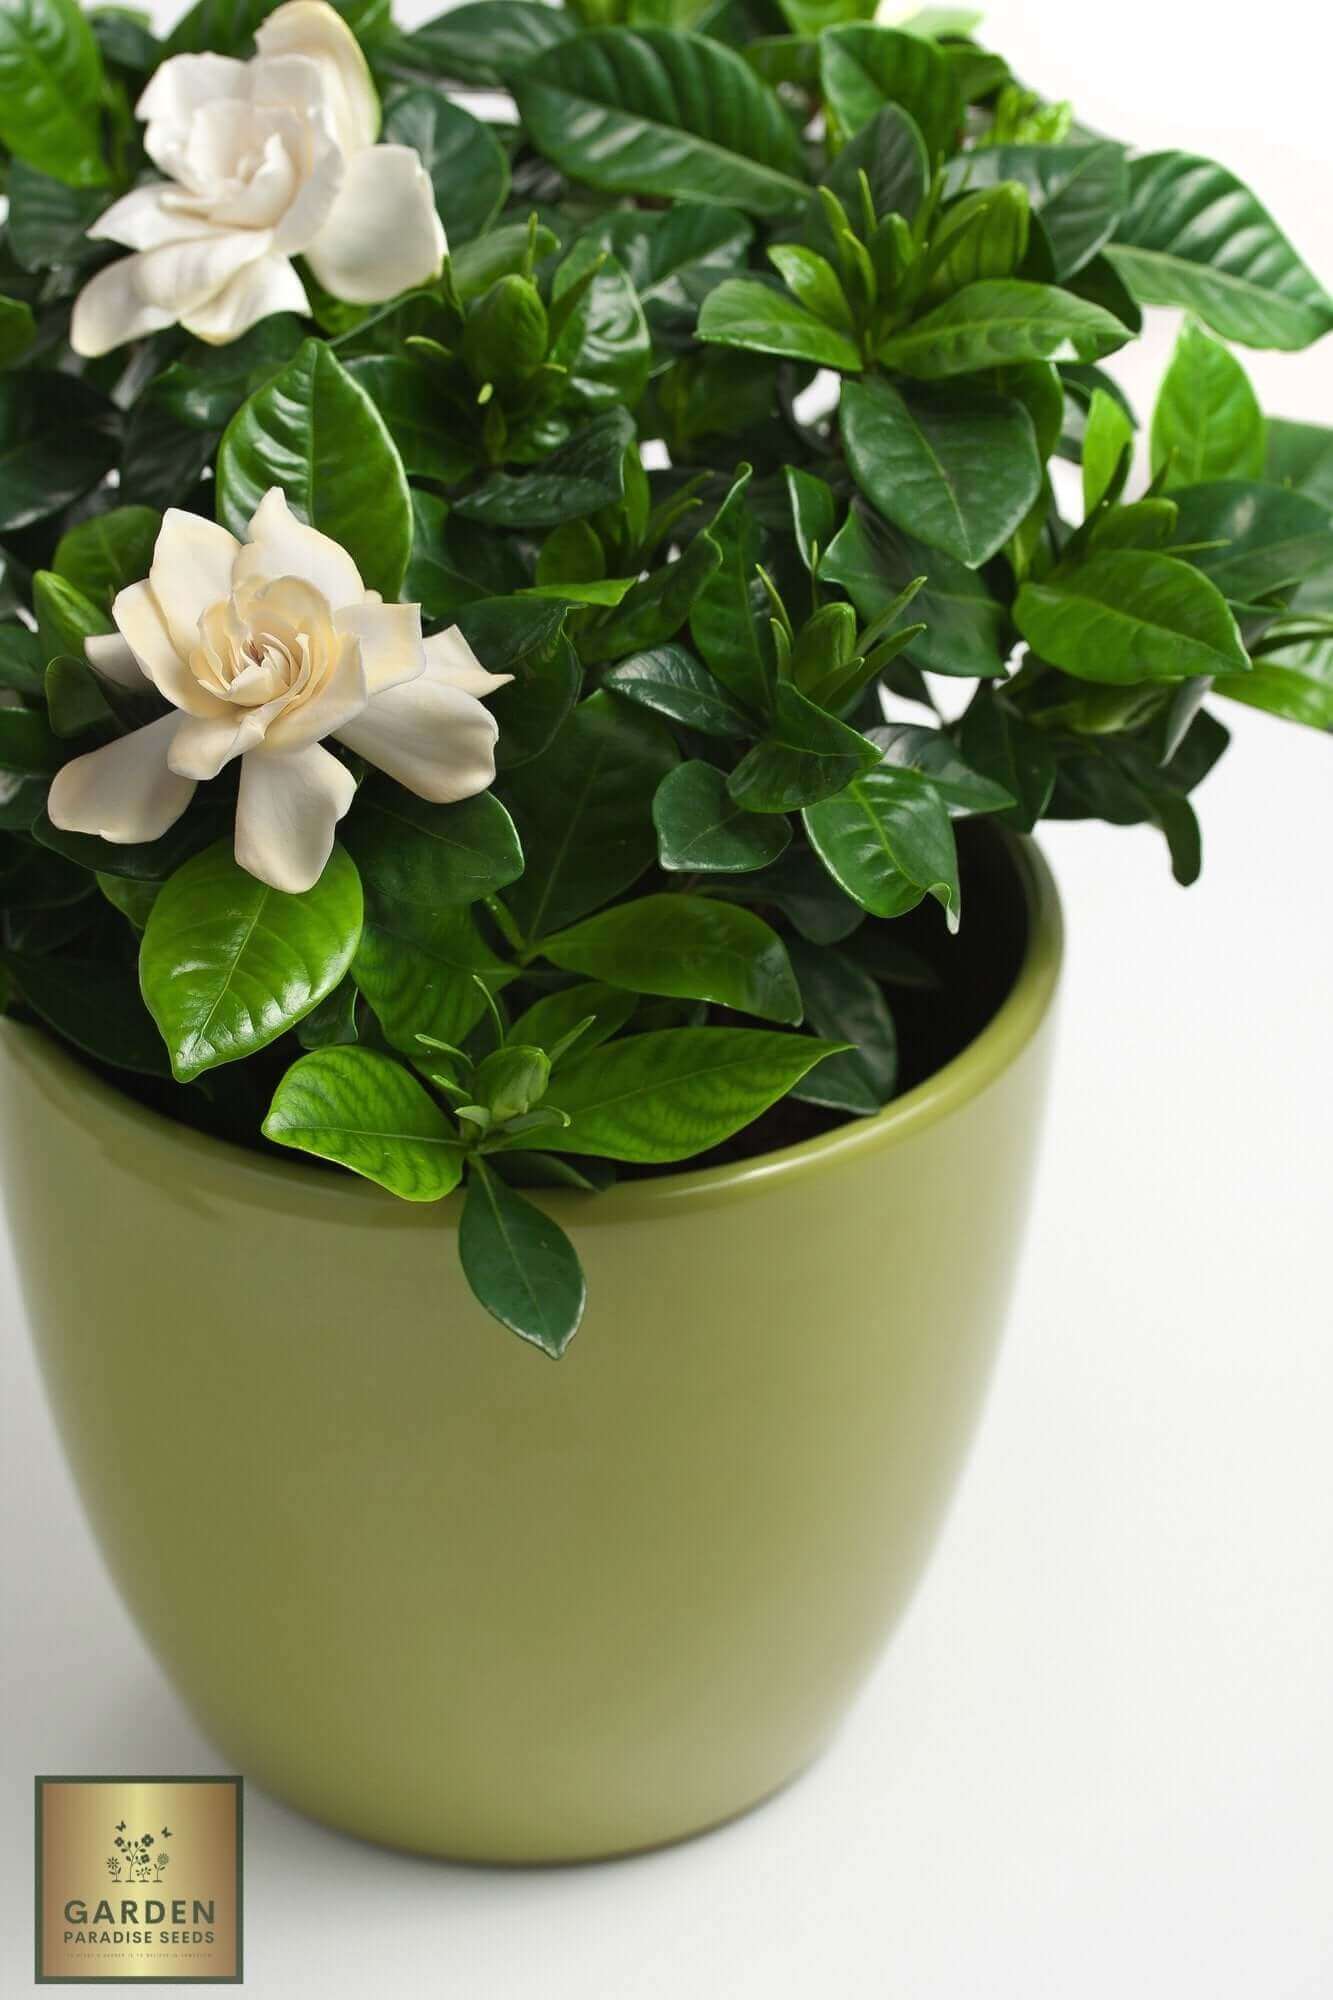 Buy Gardenia Jasminoides Seeds Online | Cultivate Your Own Stunning Gardenia Plants 